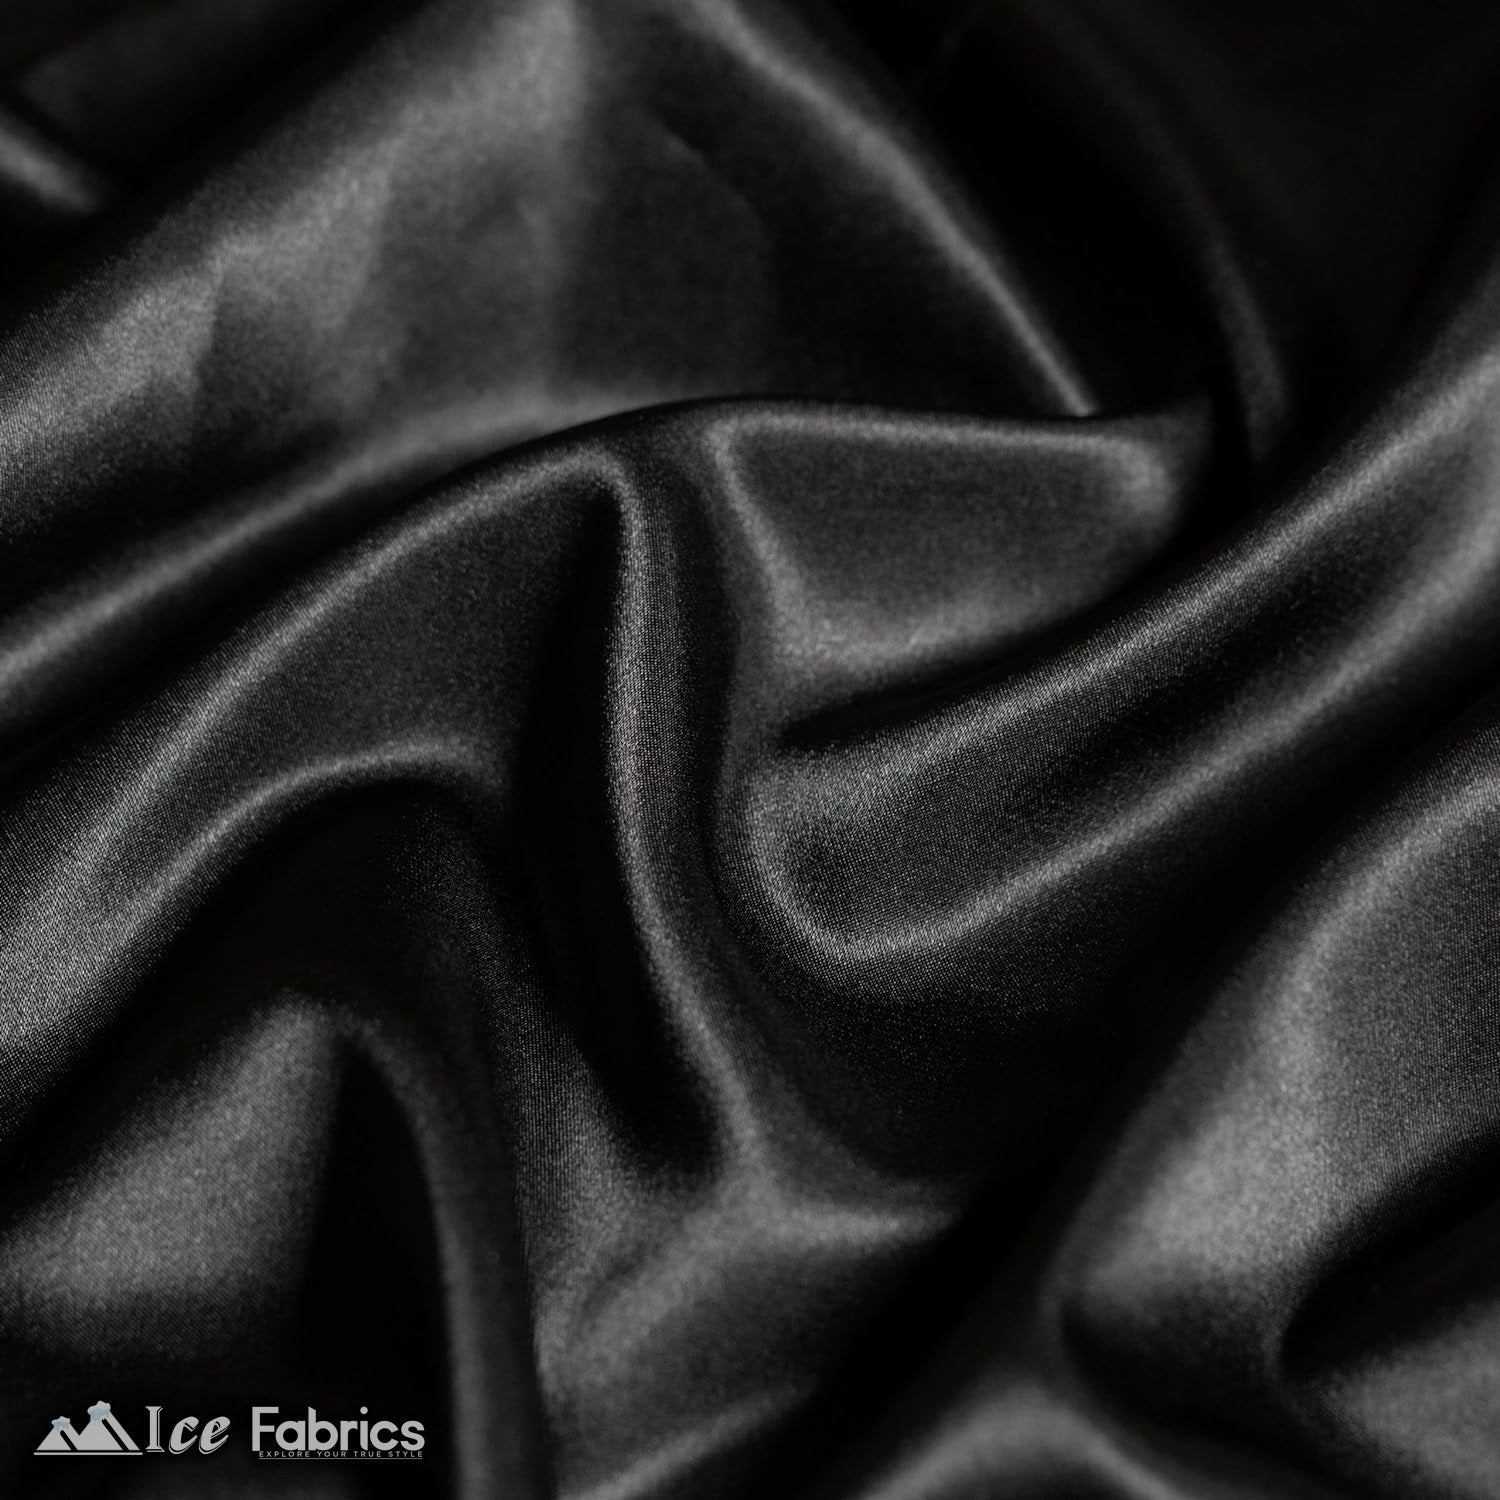 New Shiny Black Charmeuse Stretch Satin FabricICE FABRICSICE FABRICSBy The Yard (60" Wide)New Shiny Black Charmeuse Stretch Satin Fabric